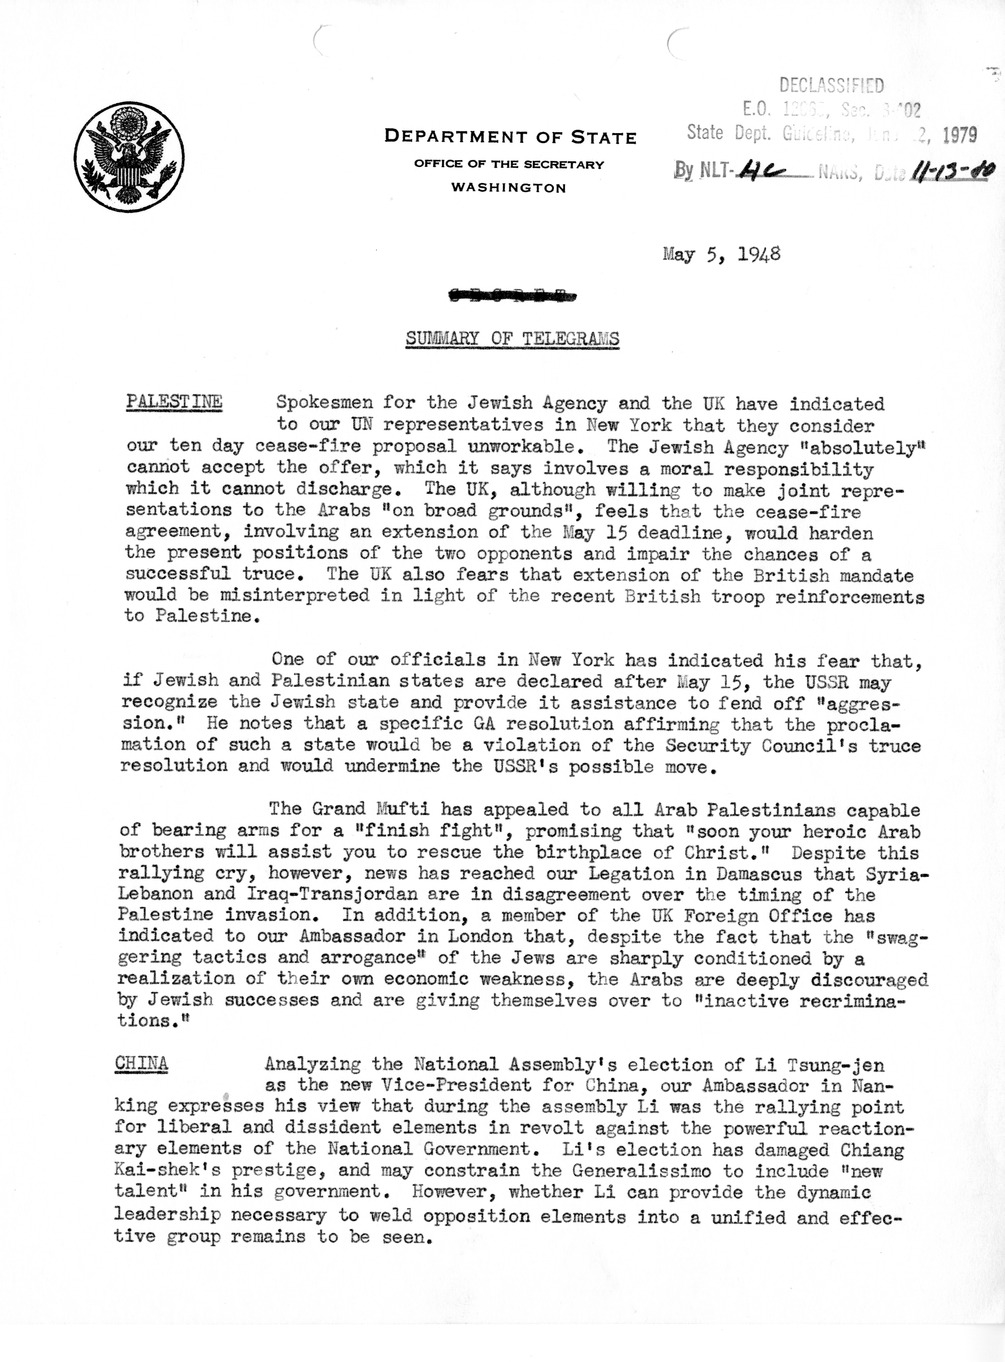 Memorandum, Department of State - Summary of Telegrams